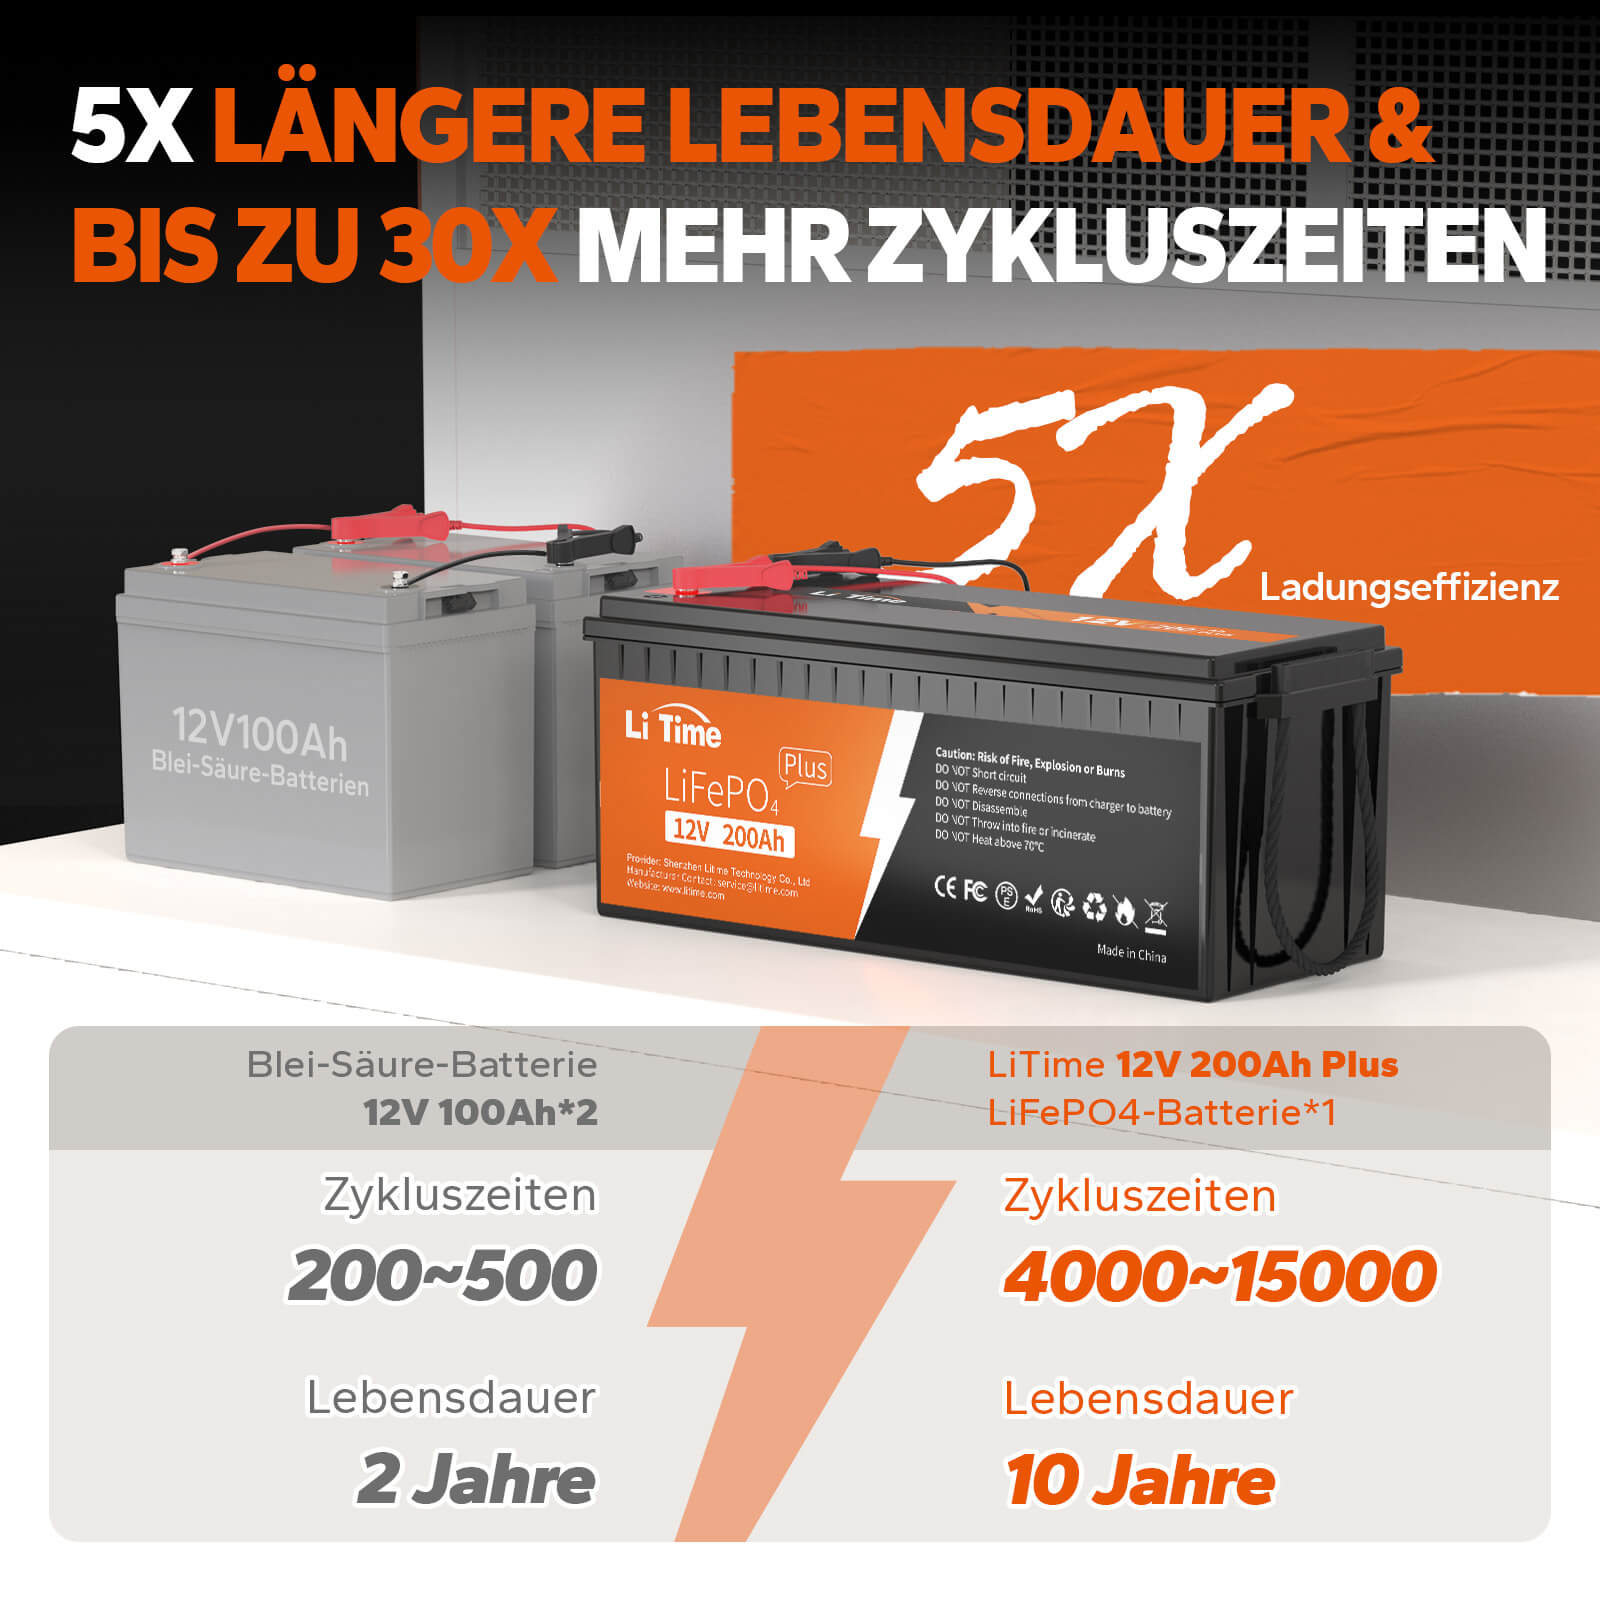 ⚡SALE⚡【0% MwSt.】LiTime 12V 200Ah Plus Lithium LiFePO4 Batterie